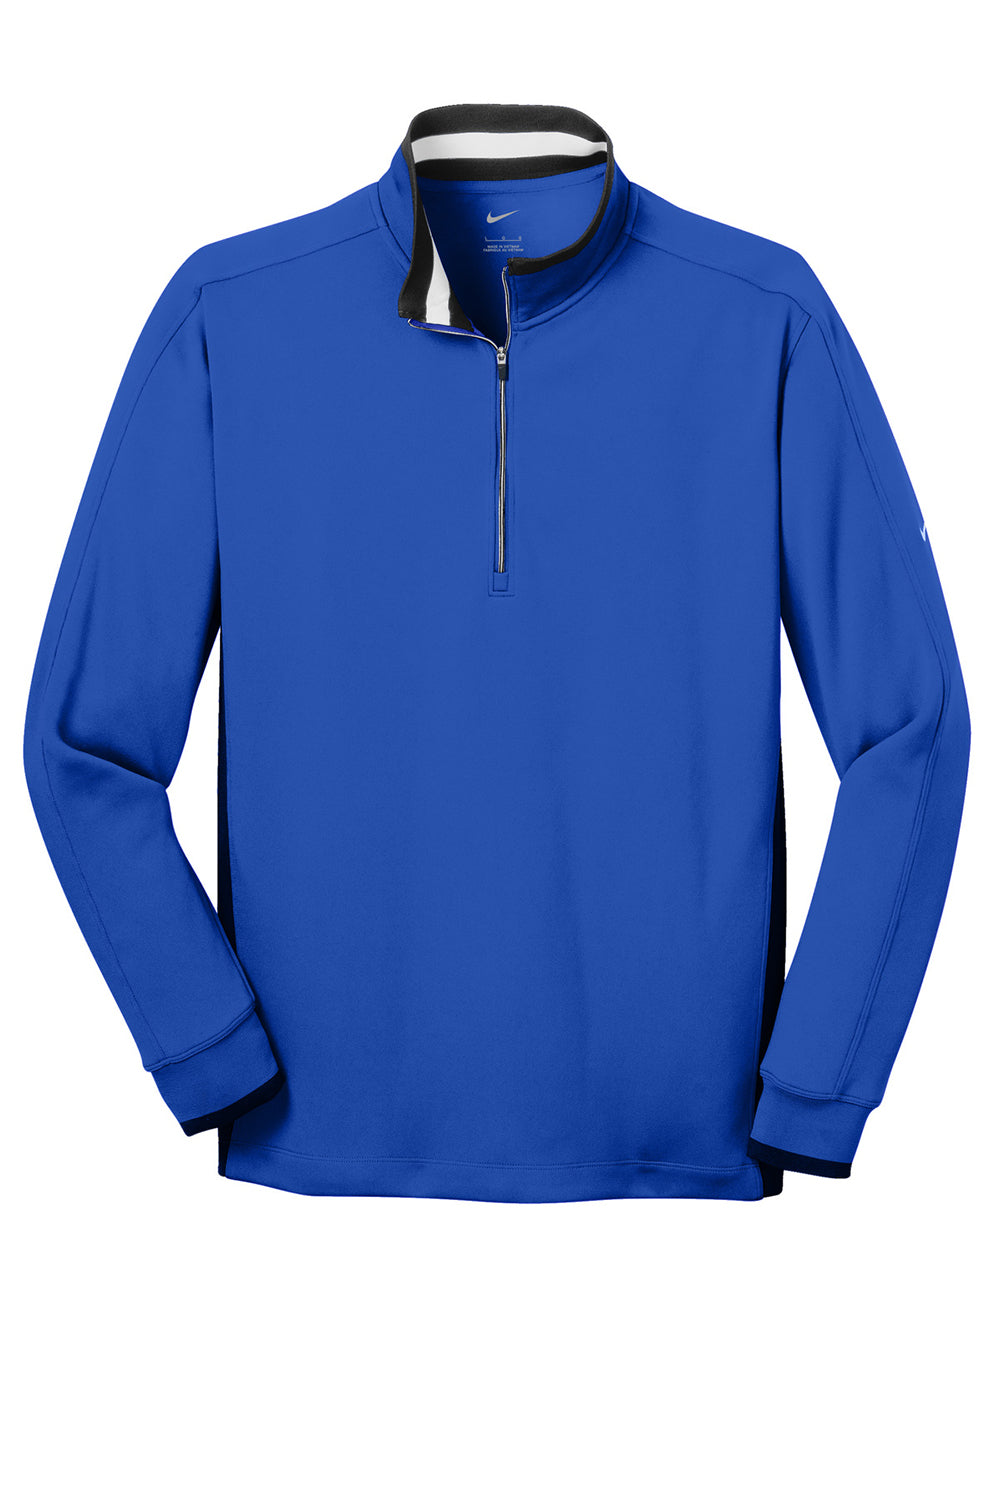 Nike 578673 Mens Dri-Fit Moisture Wicking 1/4 Zip Sweatshirt Royal Blue/Black/White Flat Front